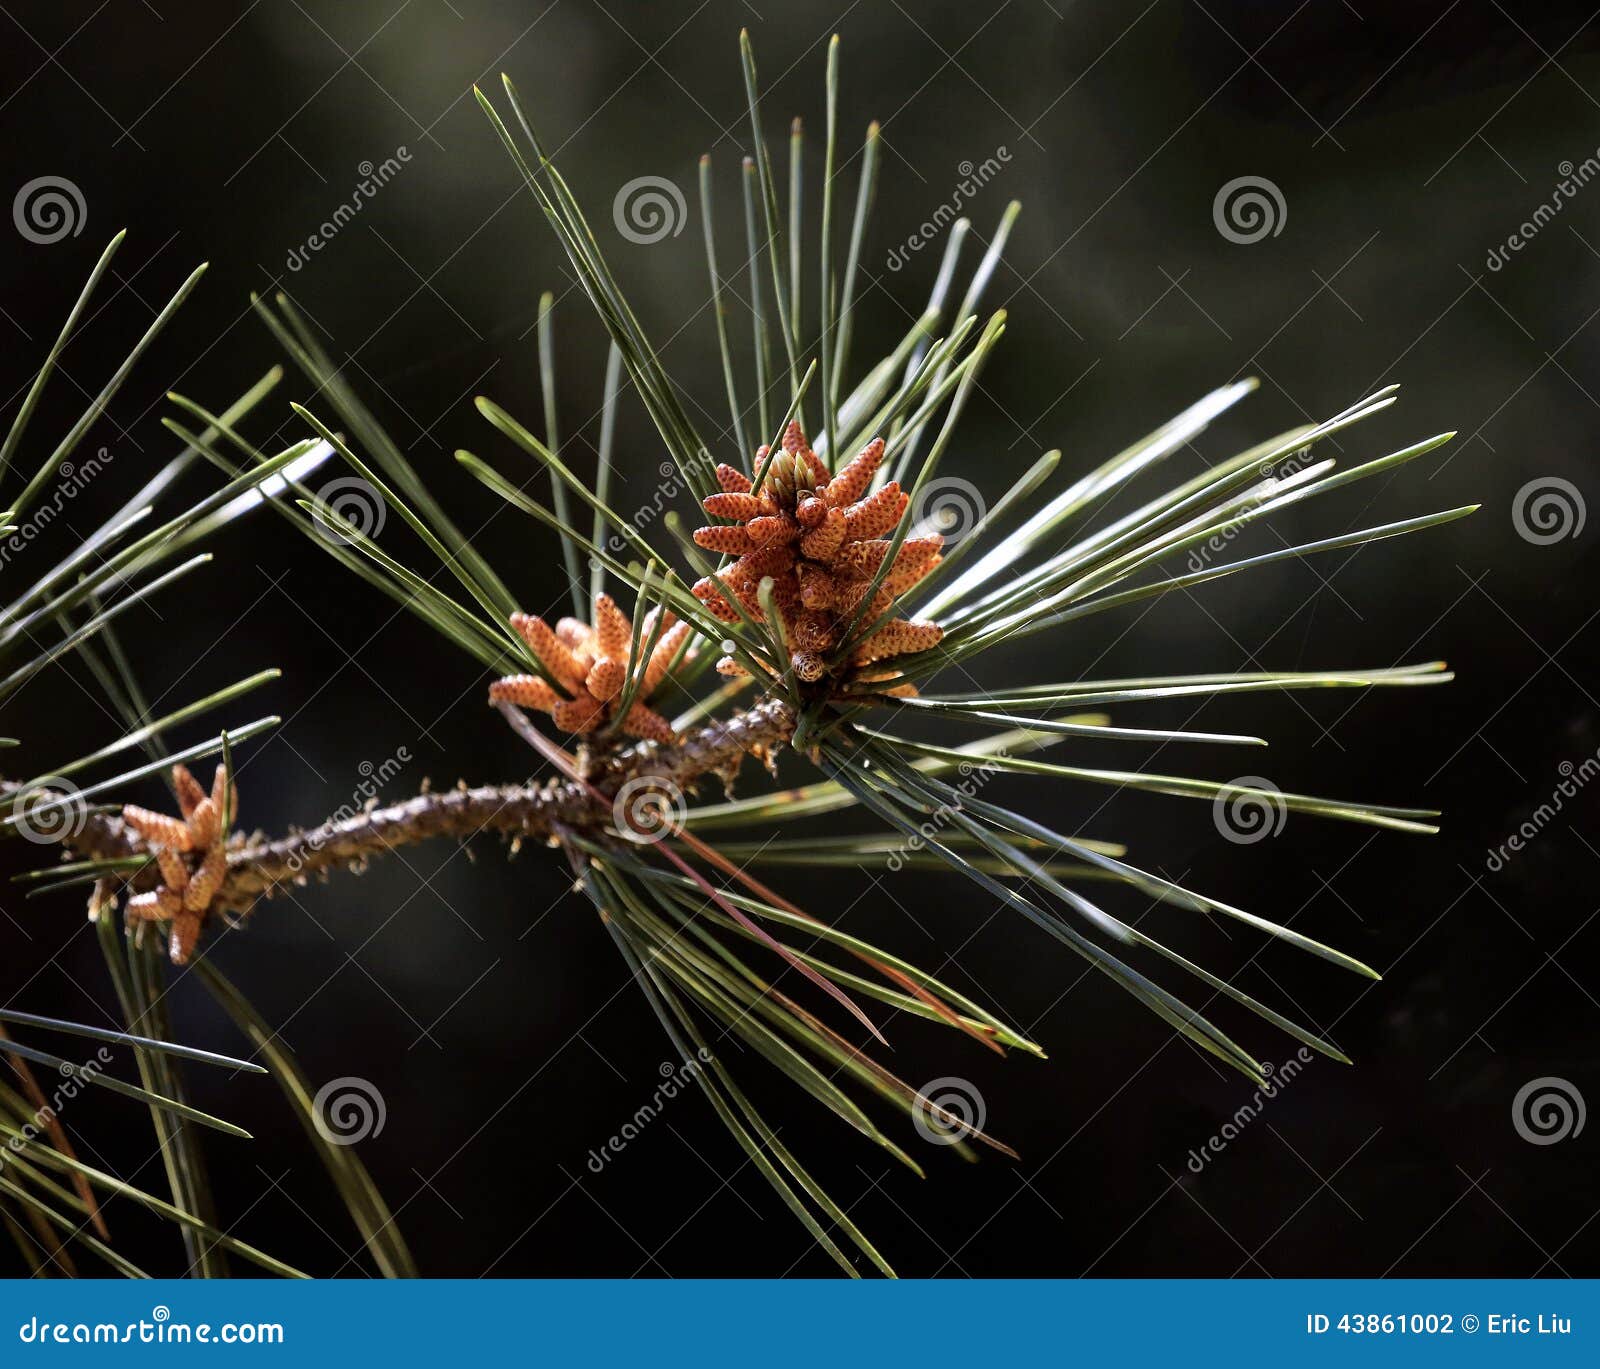 pinaceae and cone